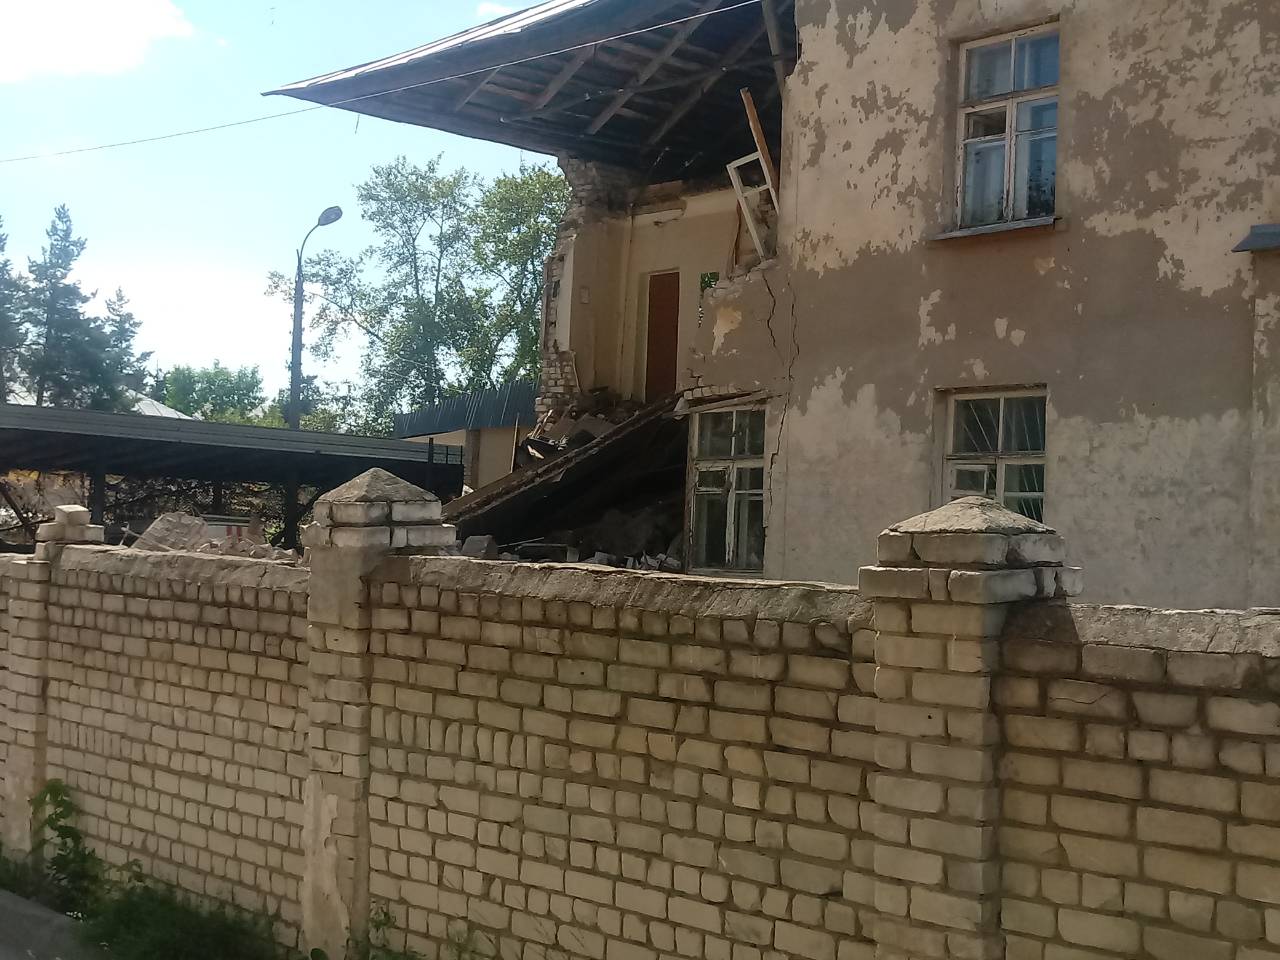 Спасали спасателей: в Дзержинске рухнуло здание МЧС (ФОТО) - фото 1